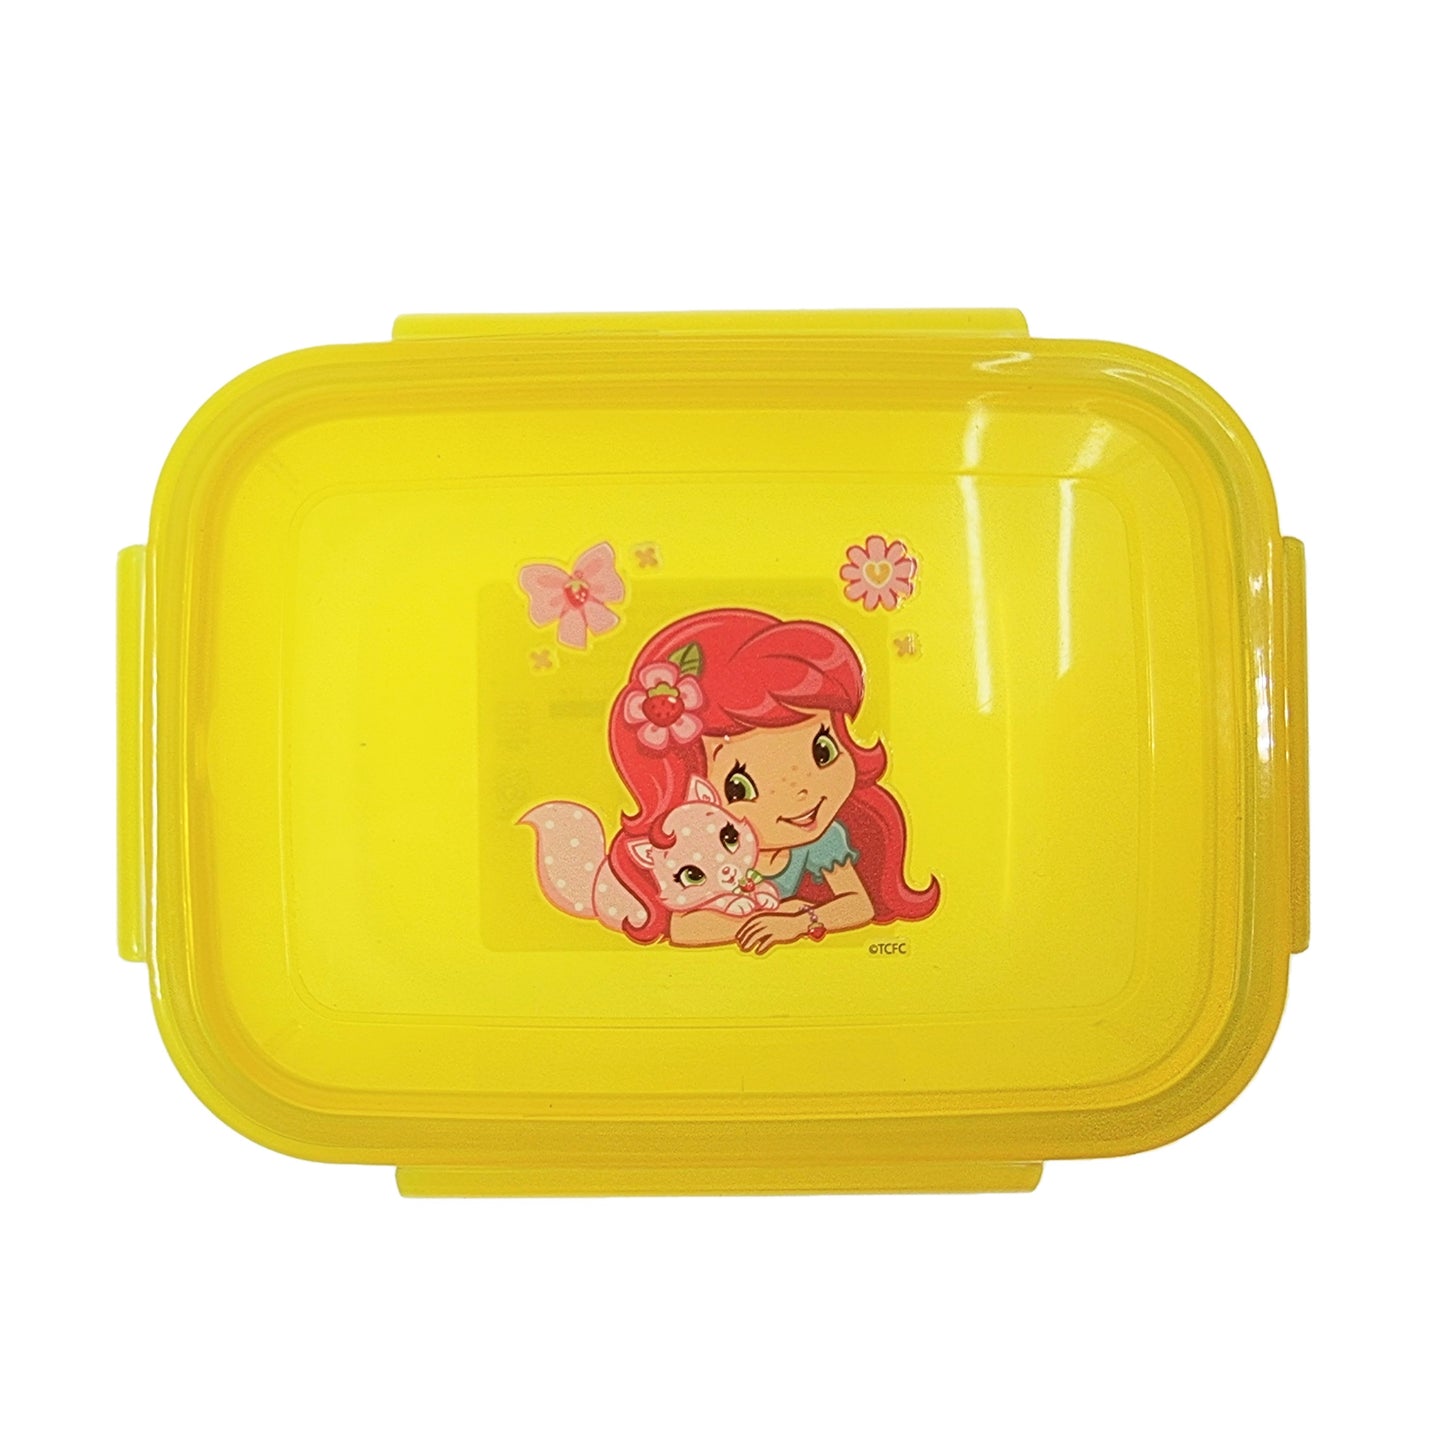 Strawberry Shortcake - Snap-lock Lunch Sandwich Box (500ml)